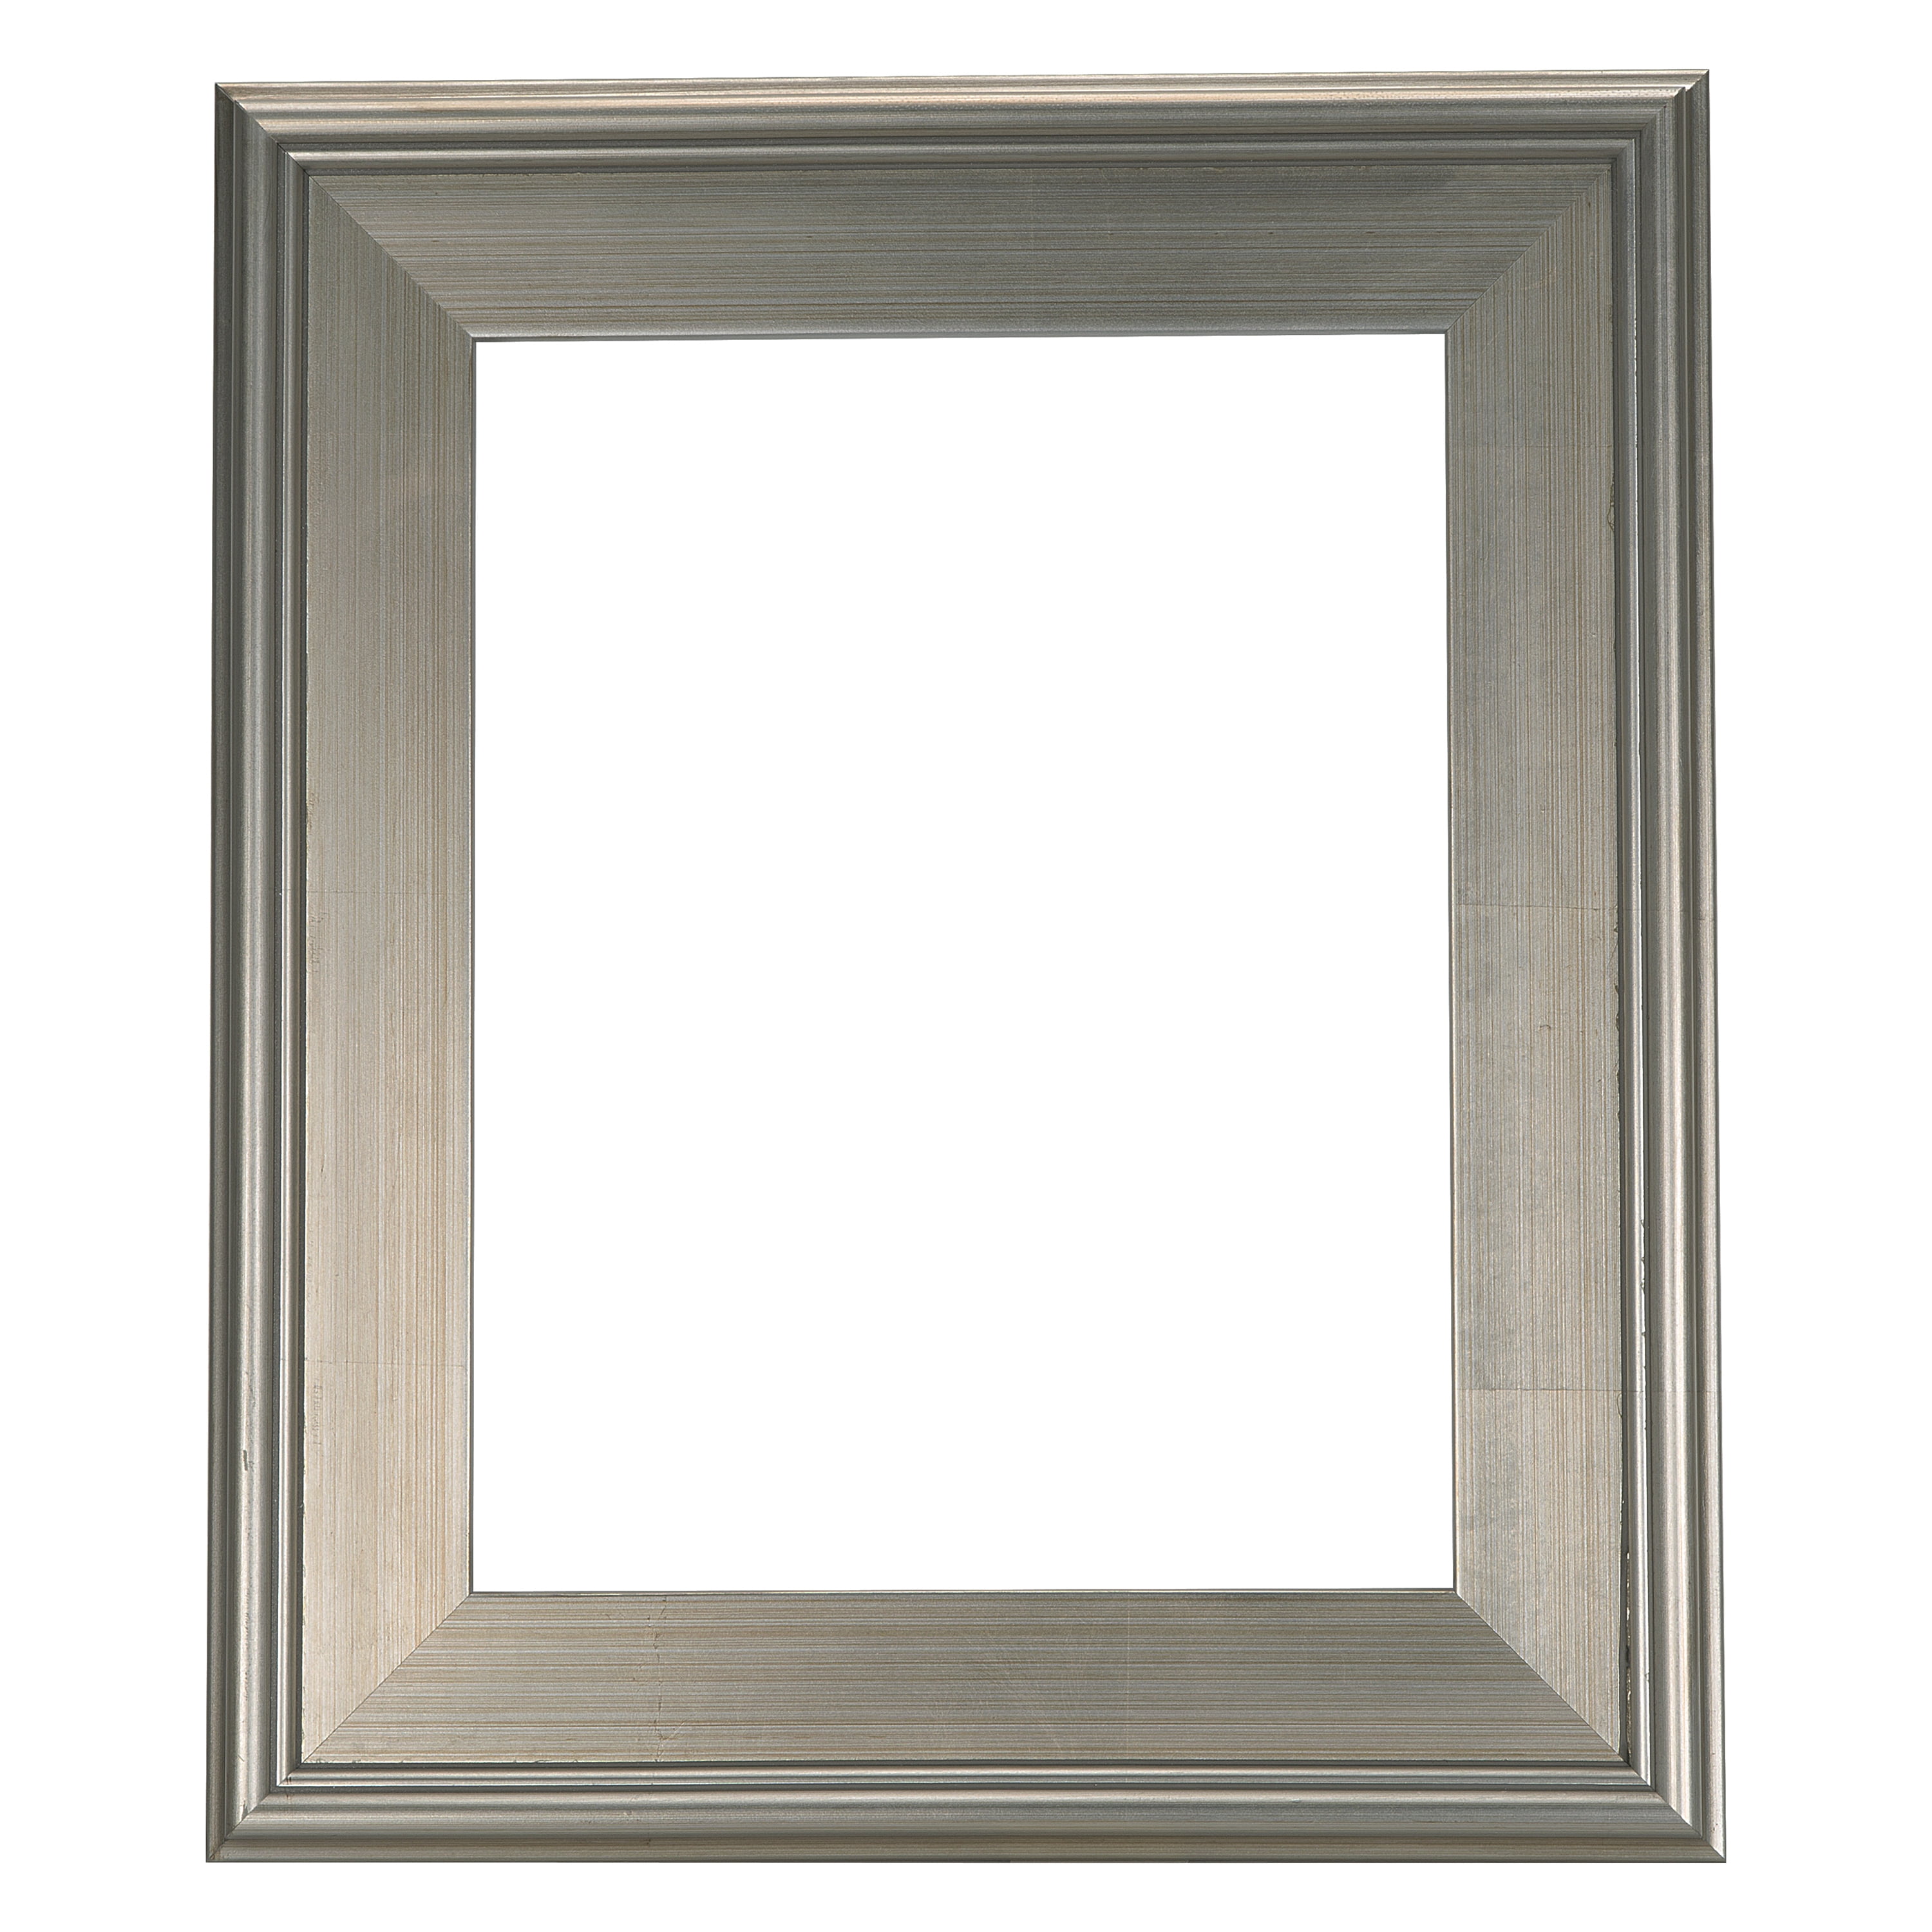 10x8 inch IMPERFECT FRAMES deep frames x 3 dark brown wood handmade NEW 